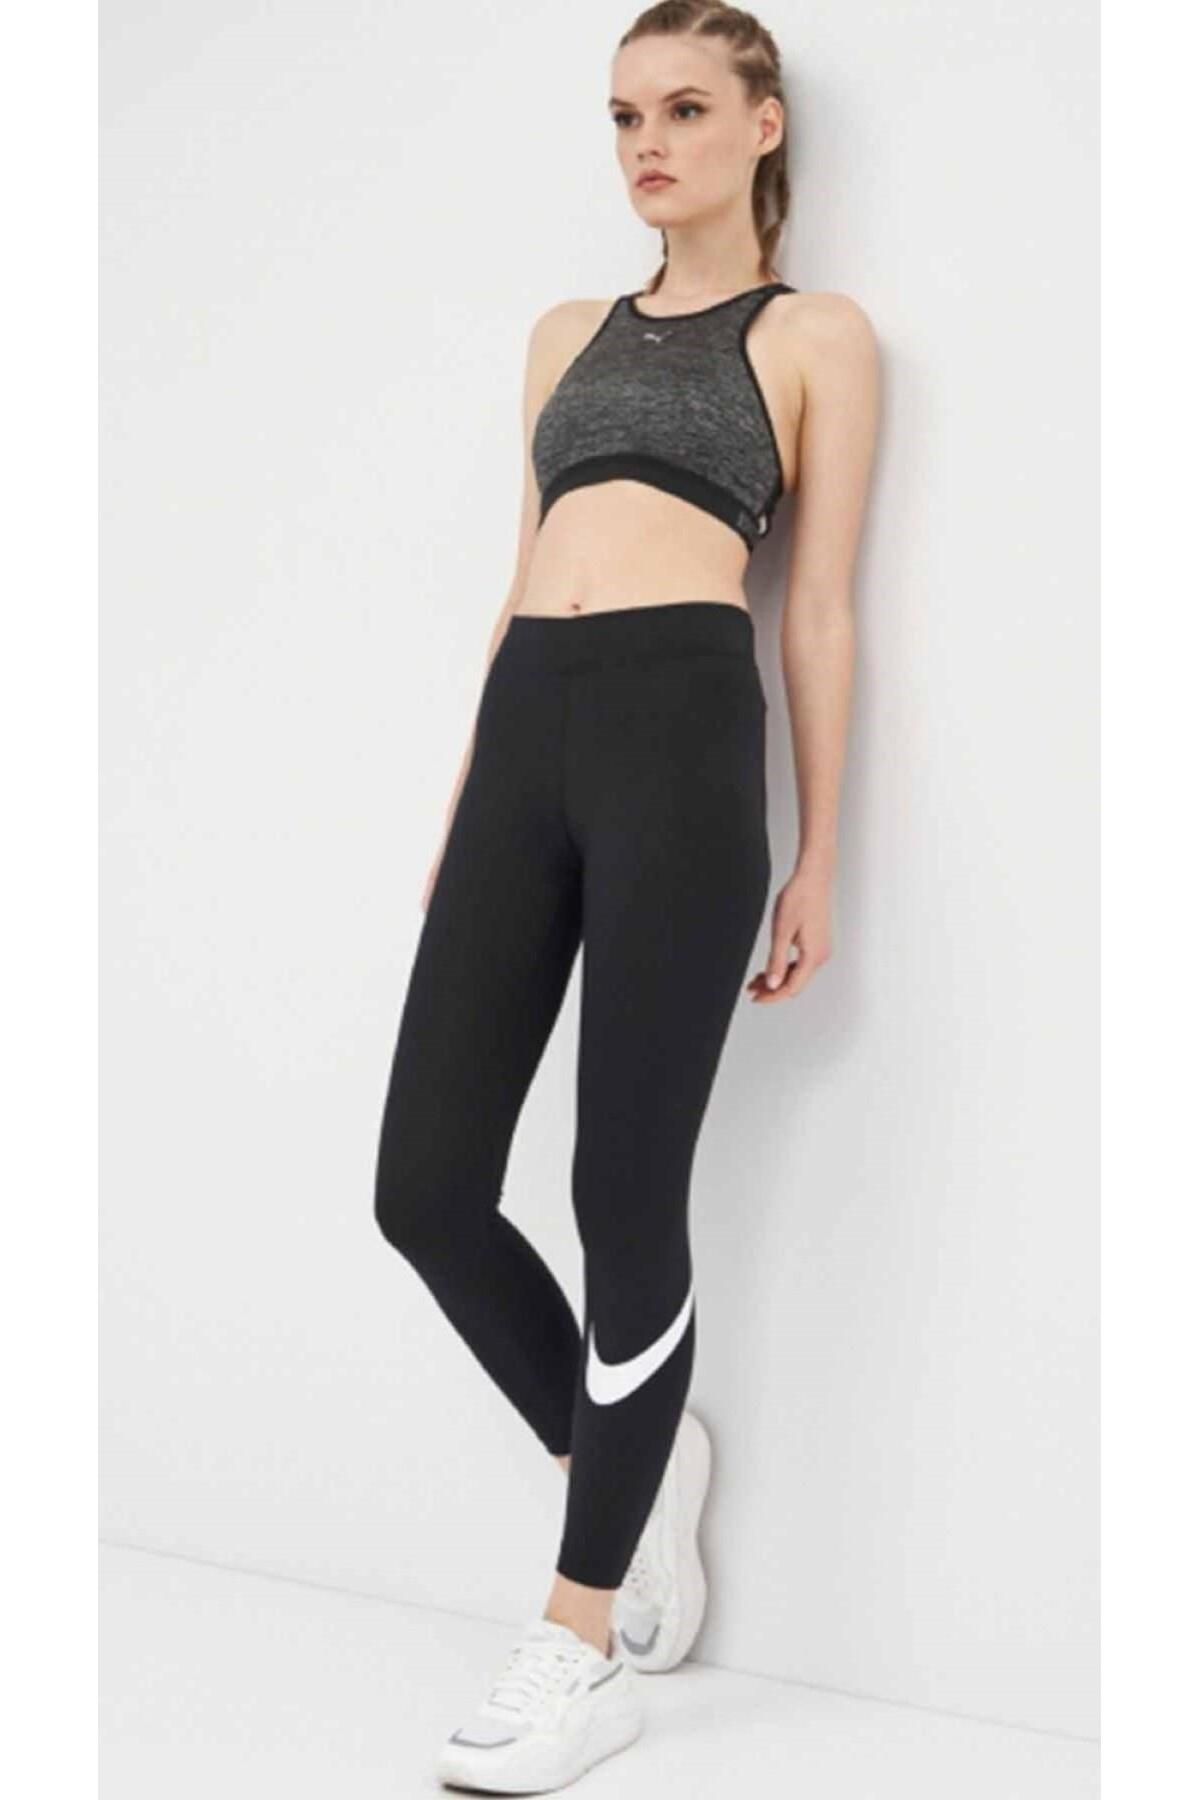 Nike black club leggings with swoosh logo